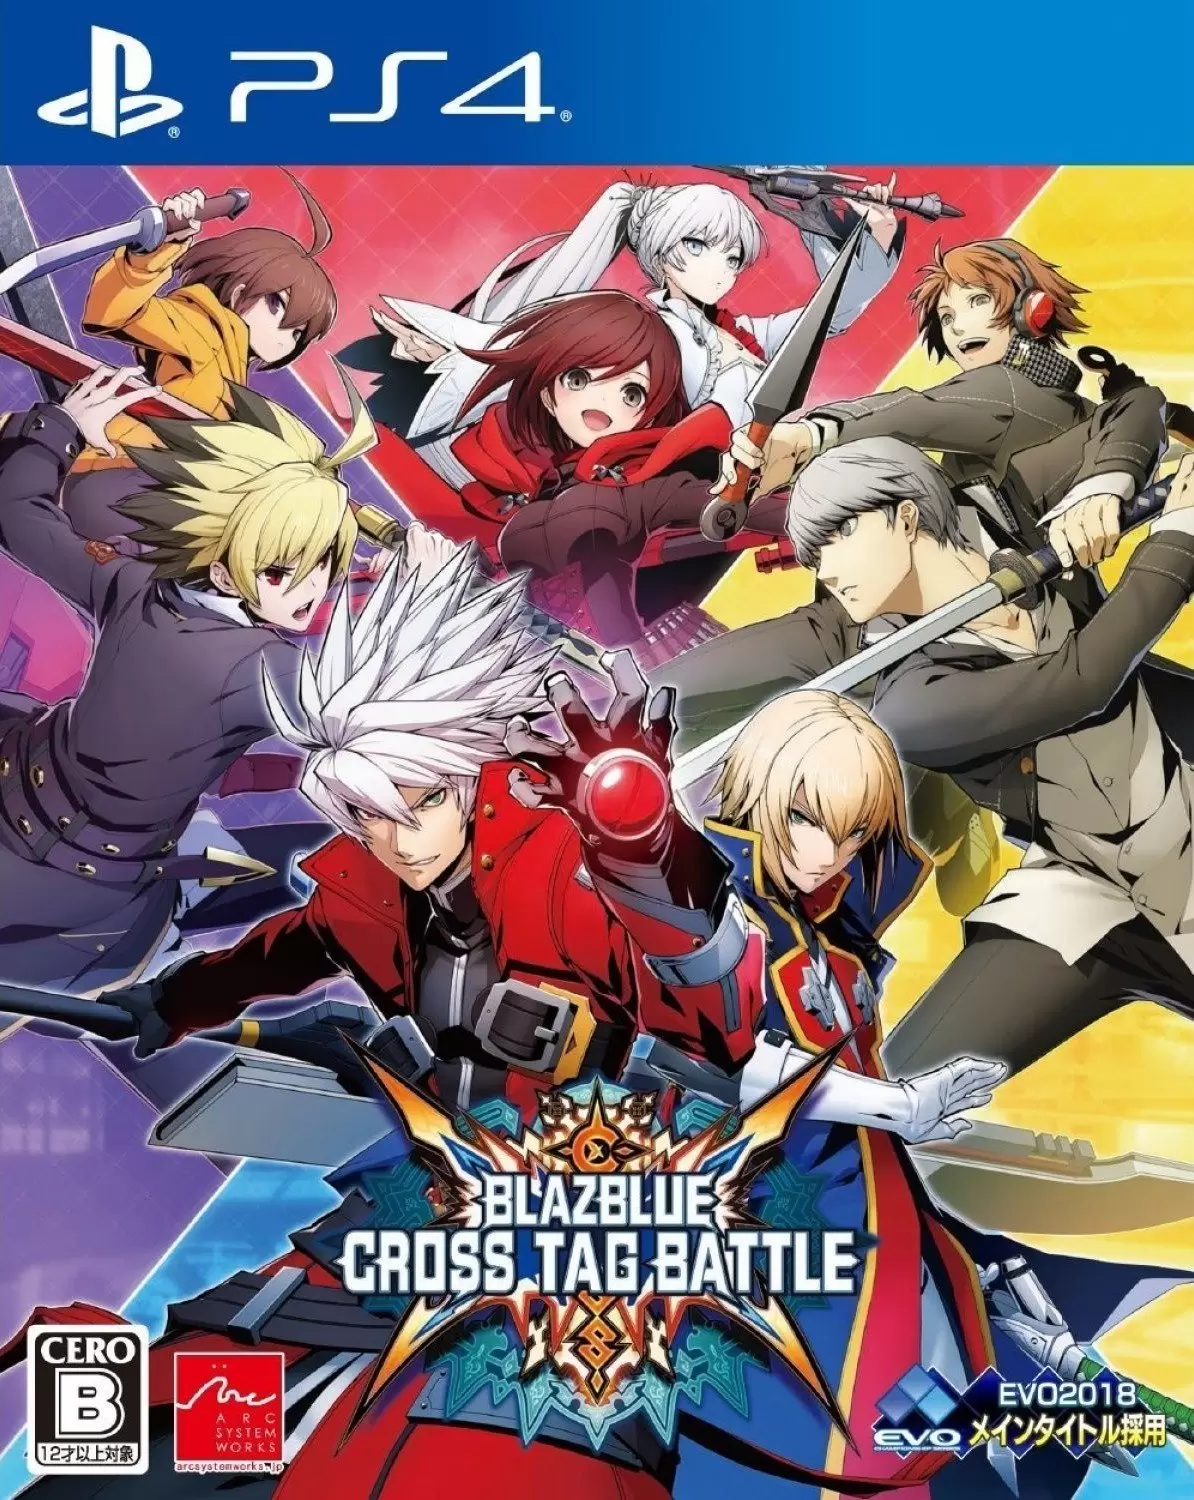 PS4 Games - BlazBlue Cross Tag Battle